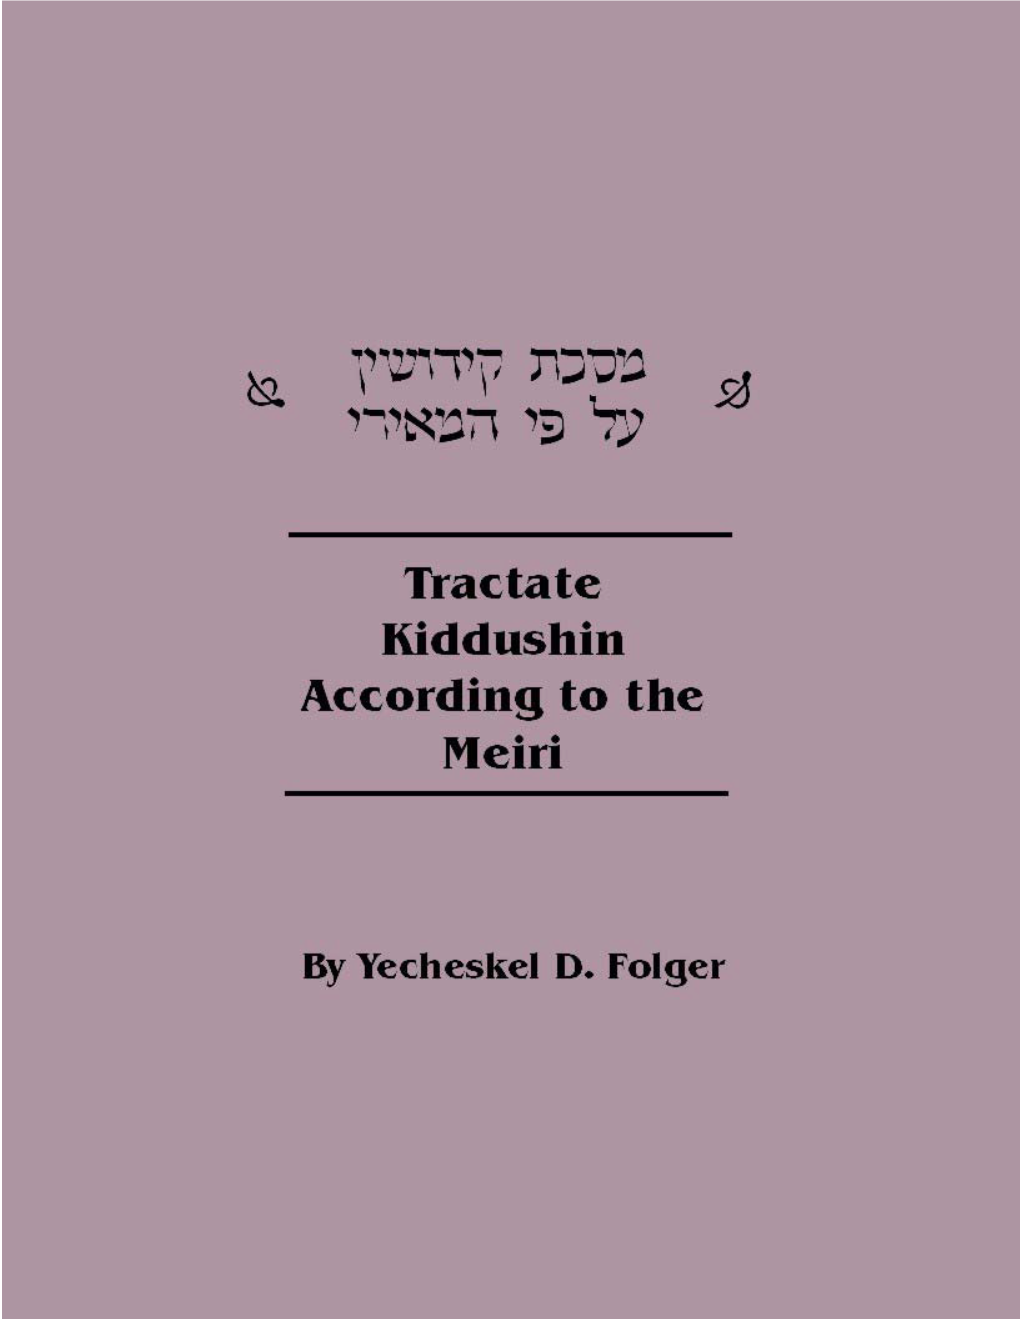 Tractate Kiddushin According to the Meiri